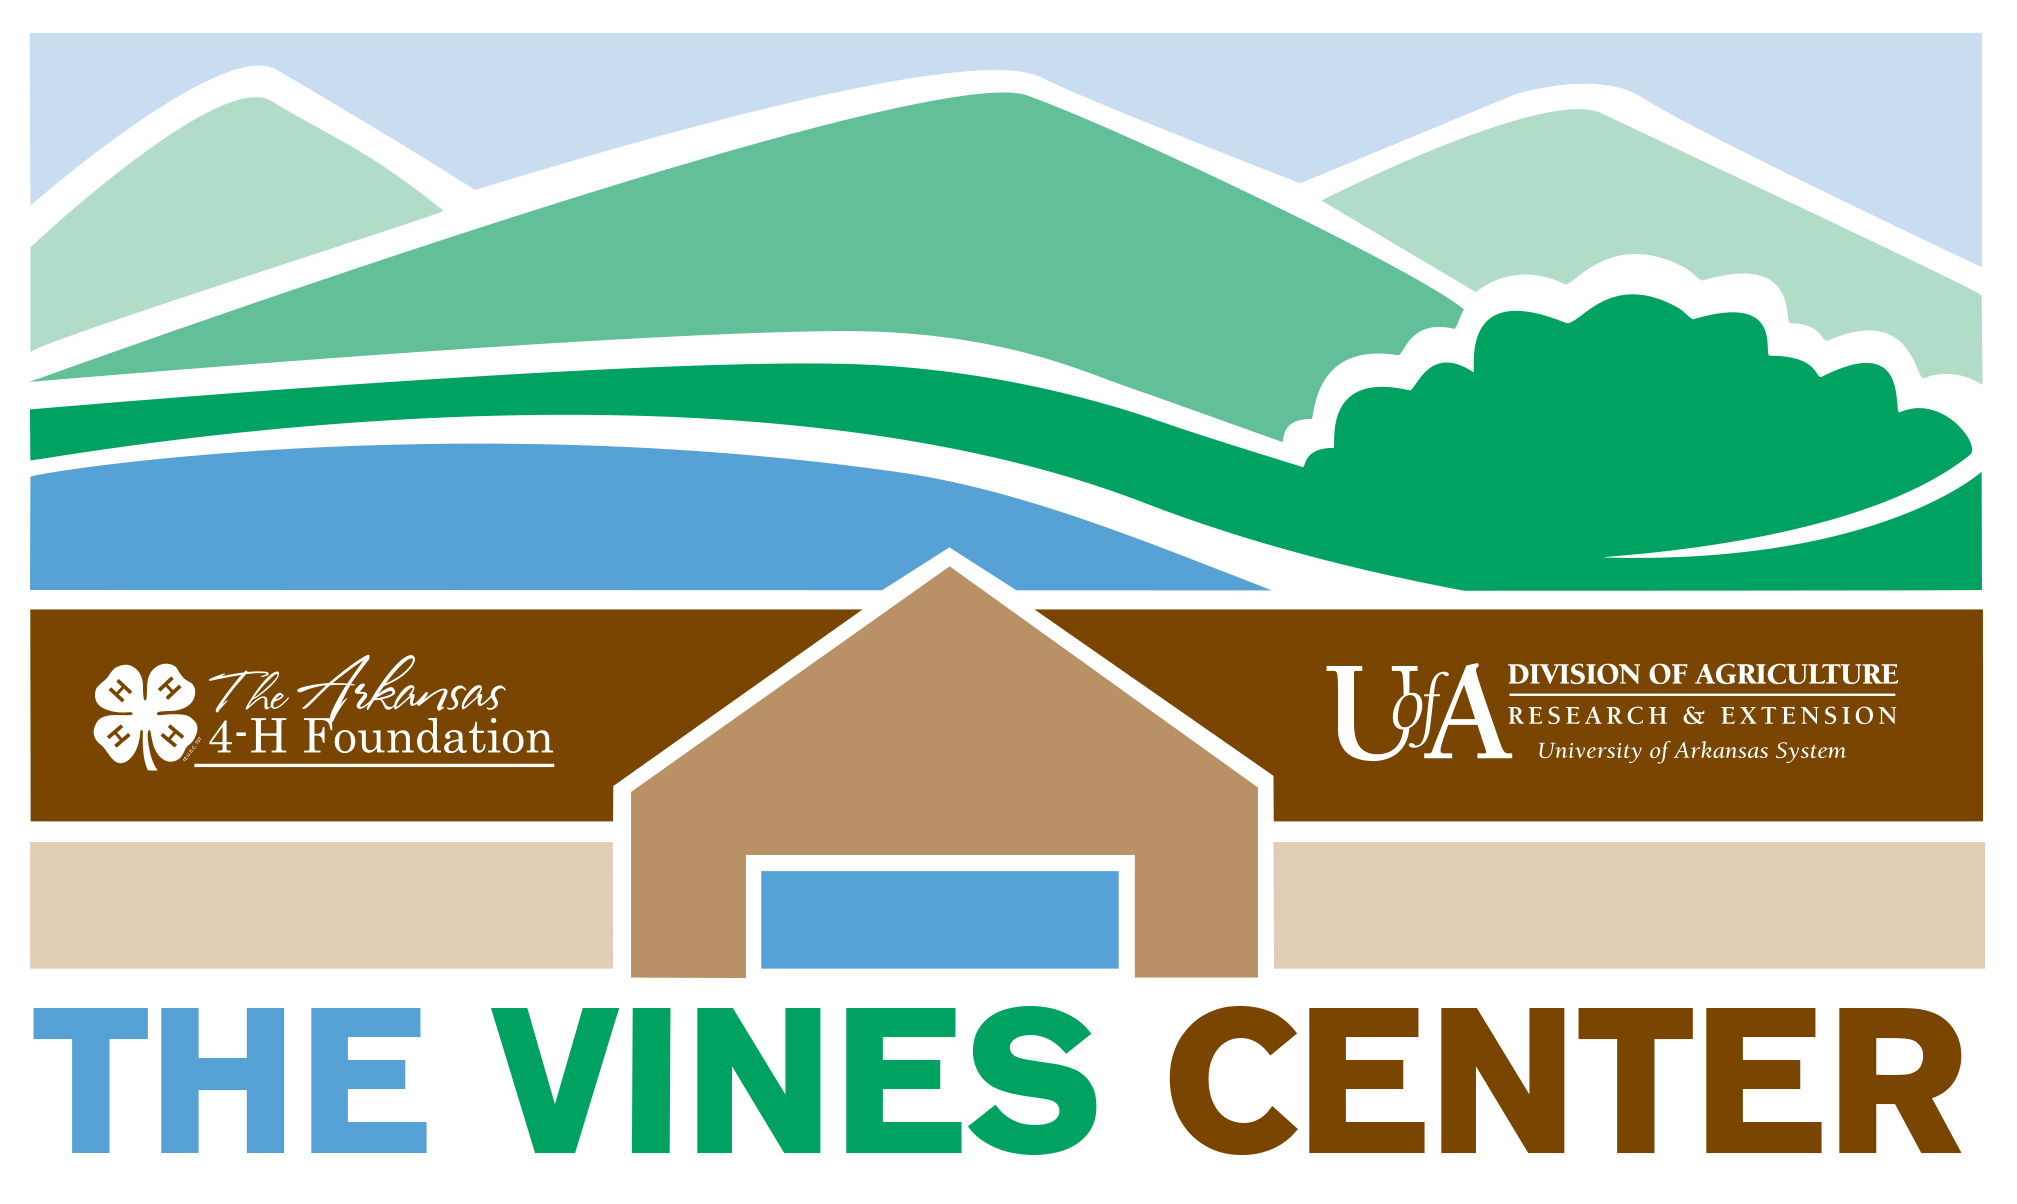 The Vines Center